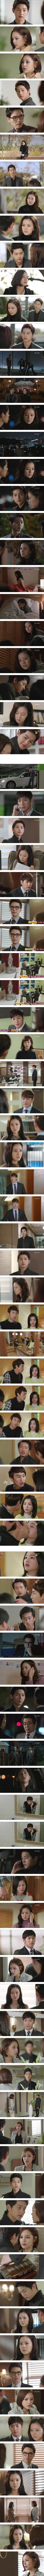 [Spoiler] Added episode 15 captures for the Korean drama 'Nice Guy'